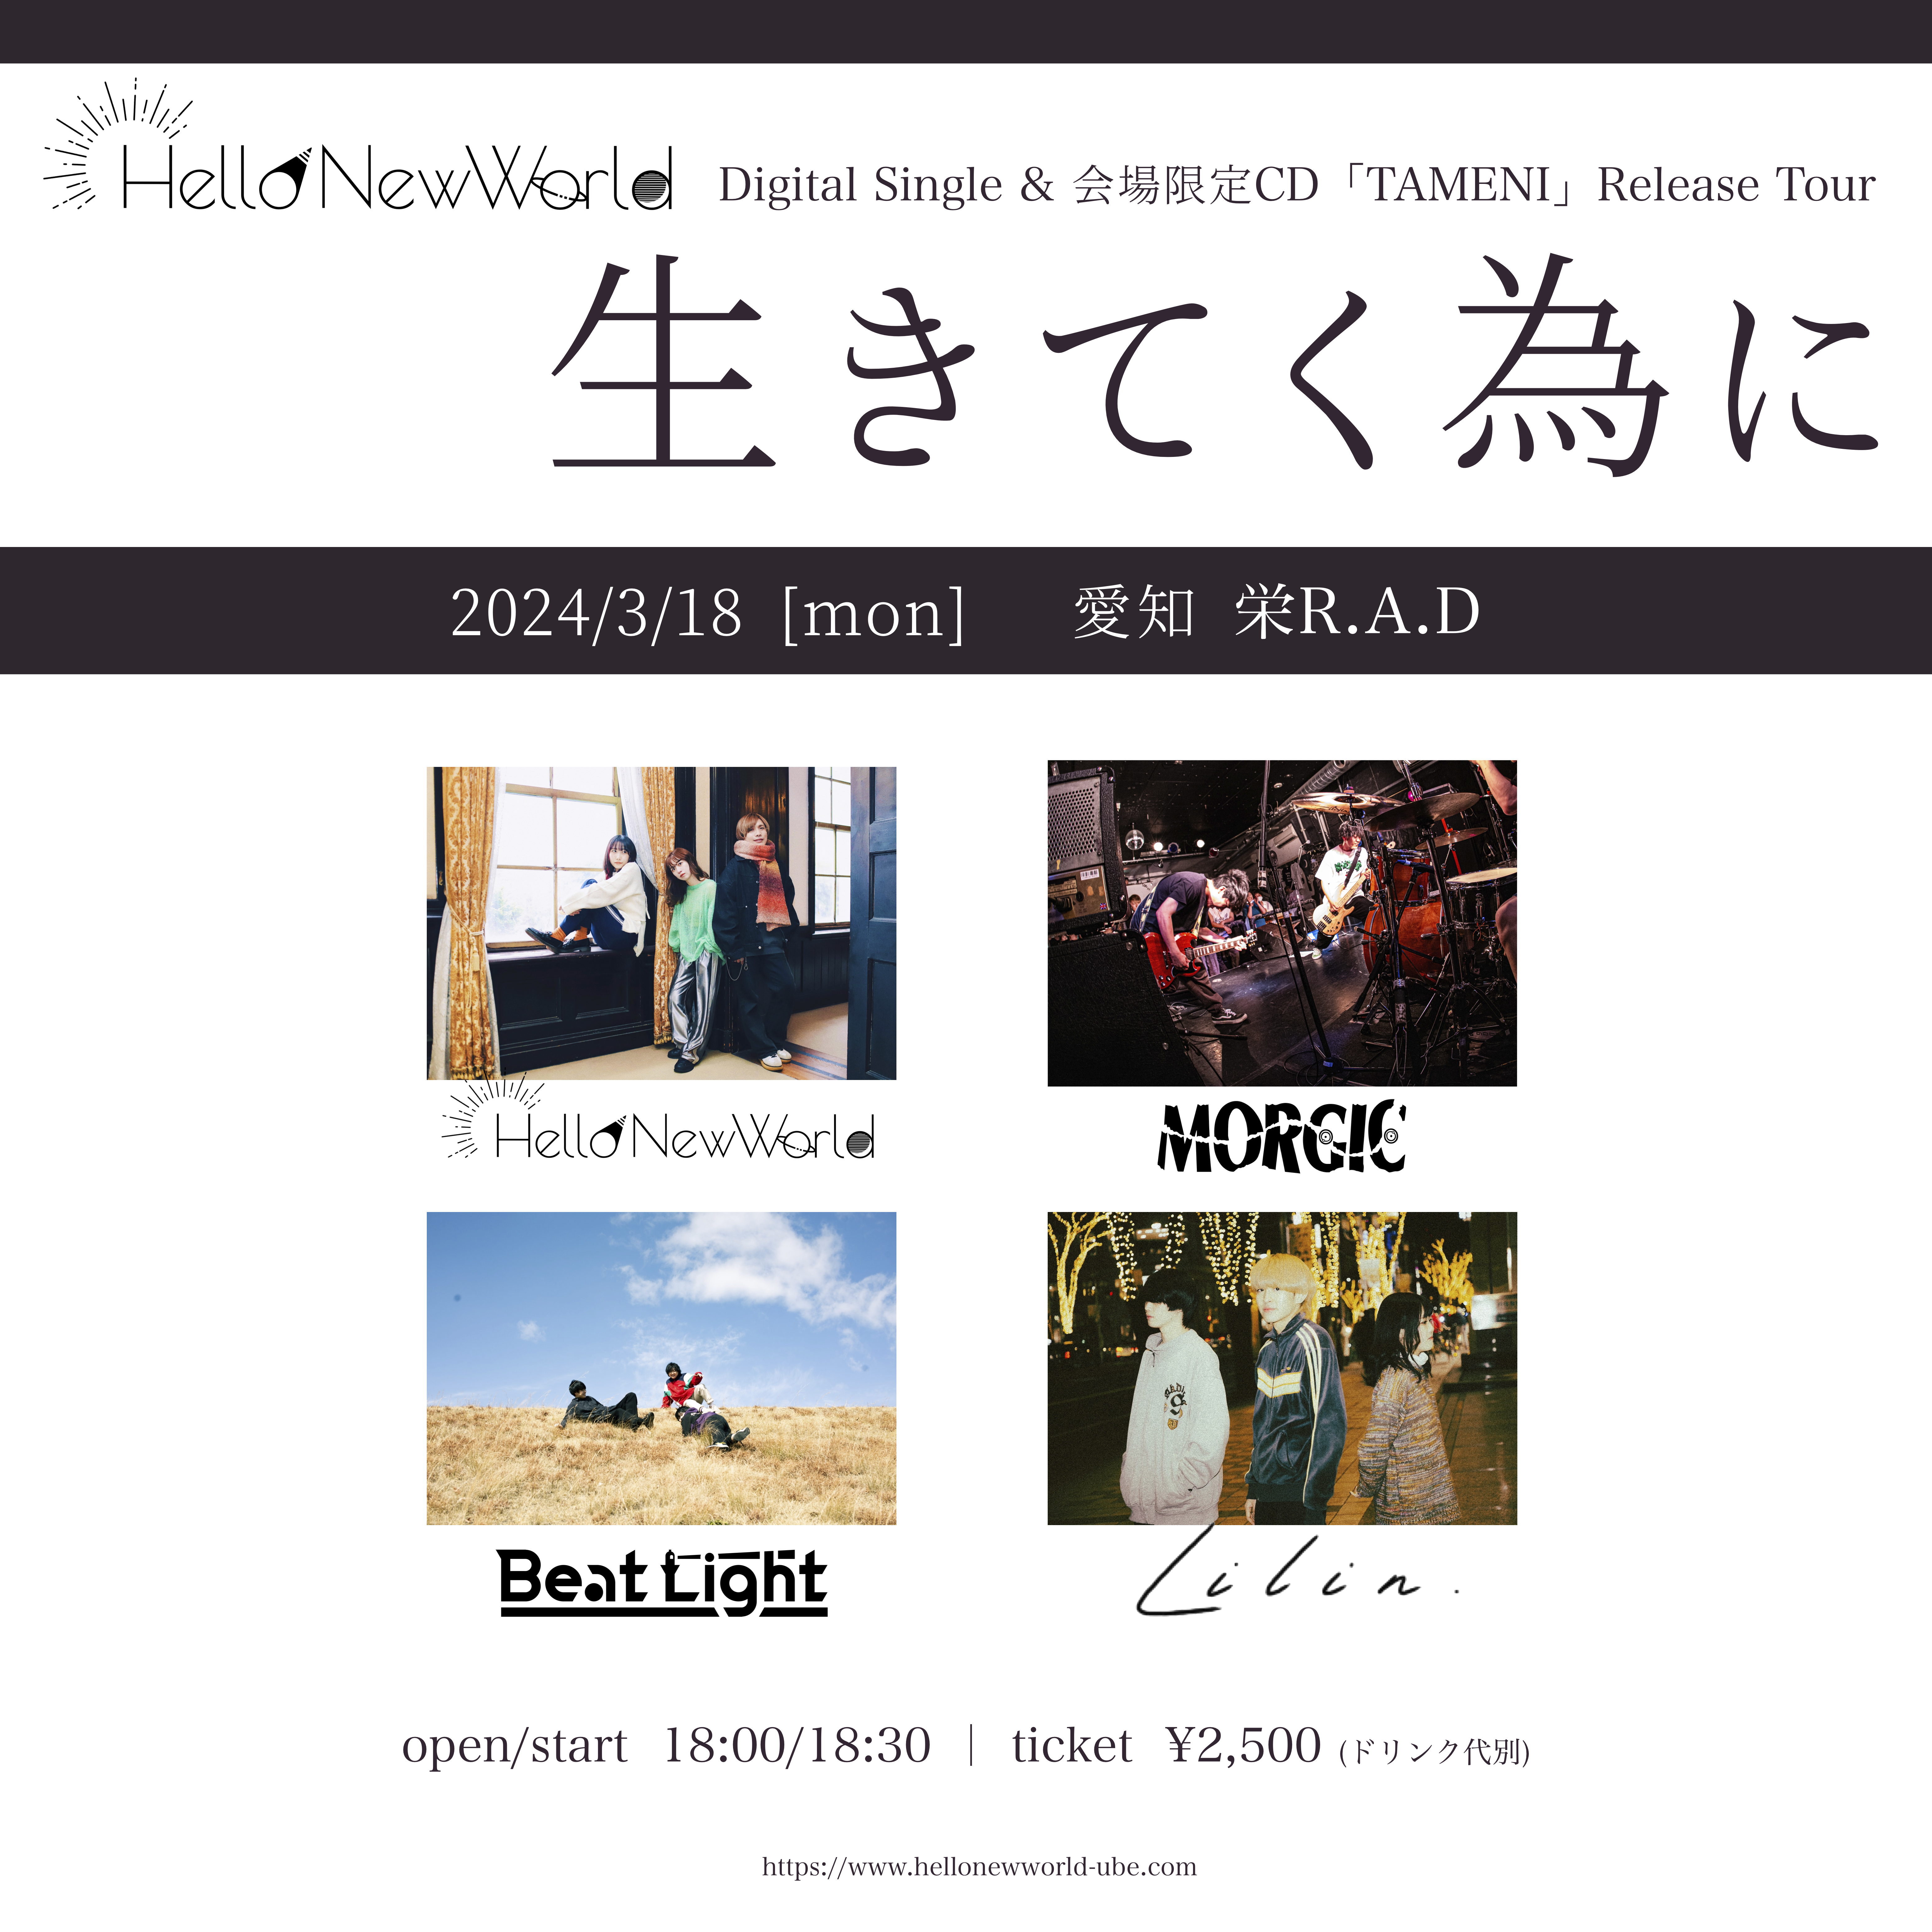 HelloNewWorld digital single & 会場限定CD 「TAMENI」release tour 『生きてく為に』